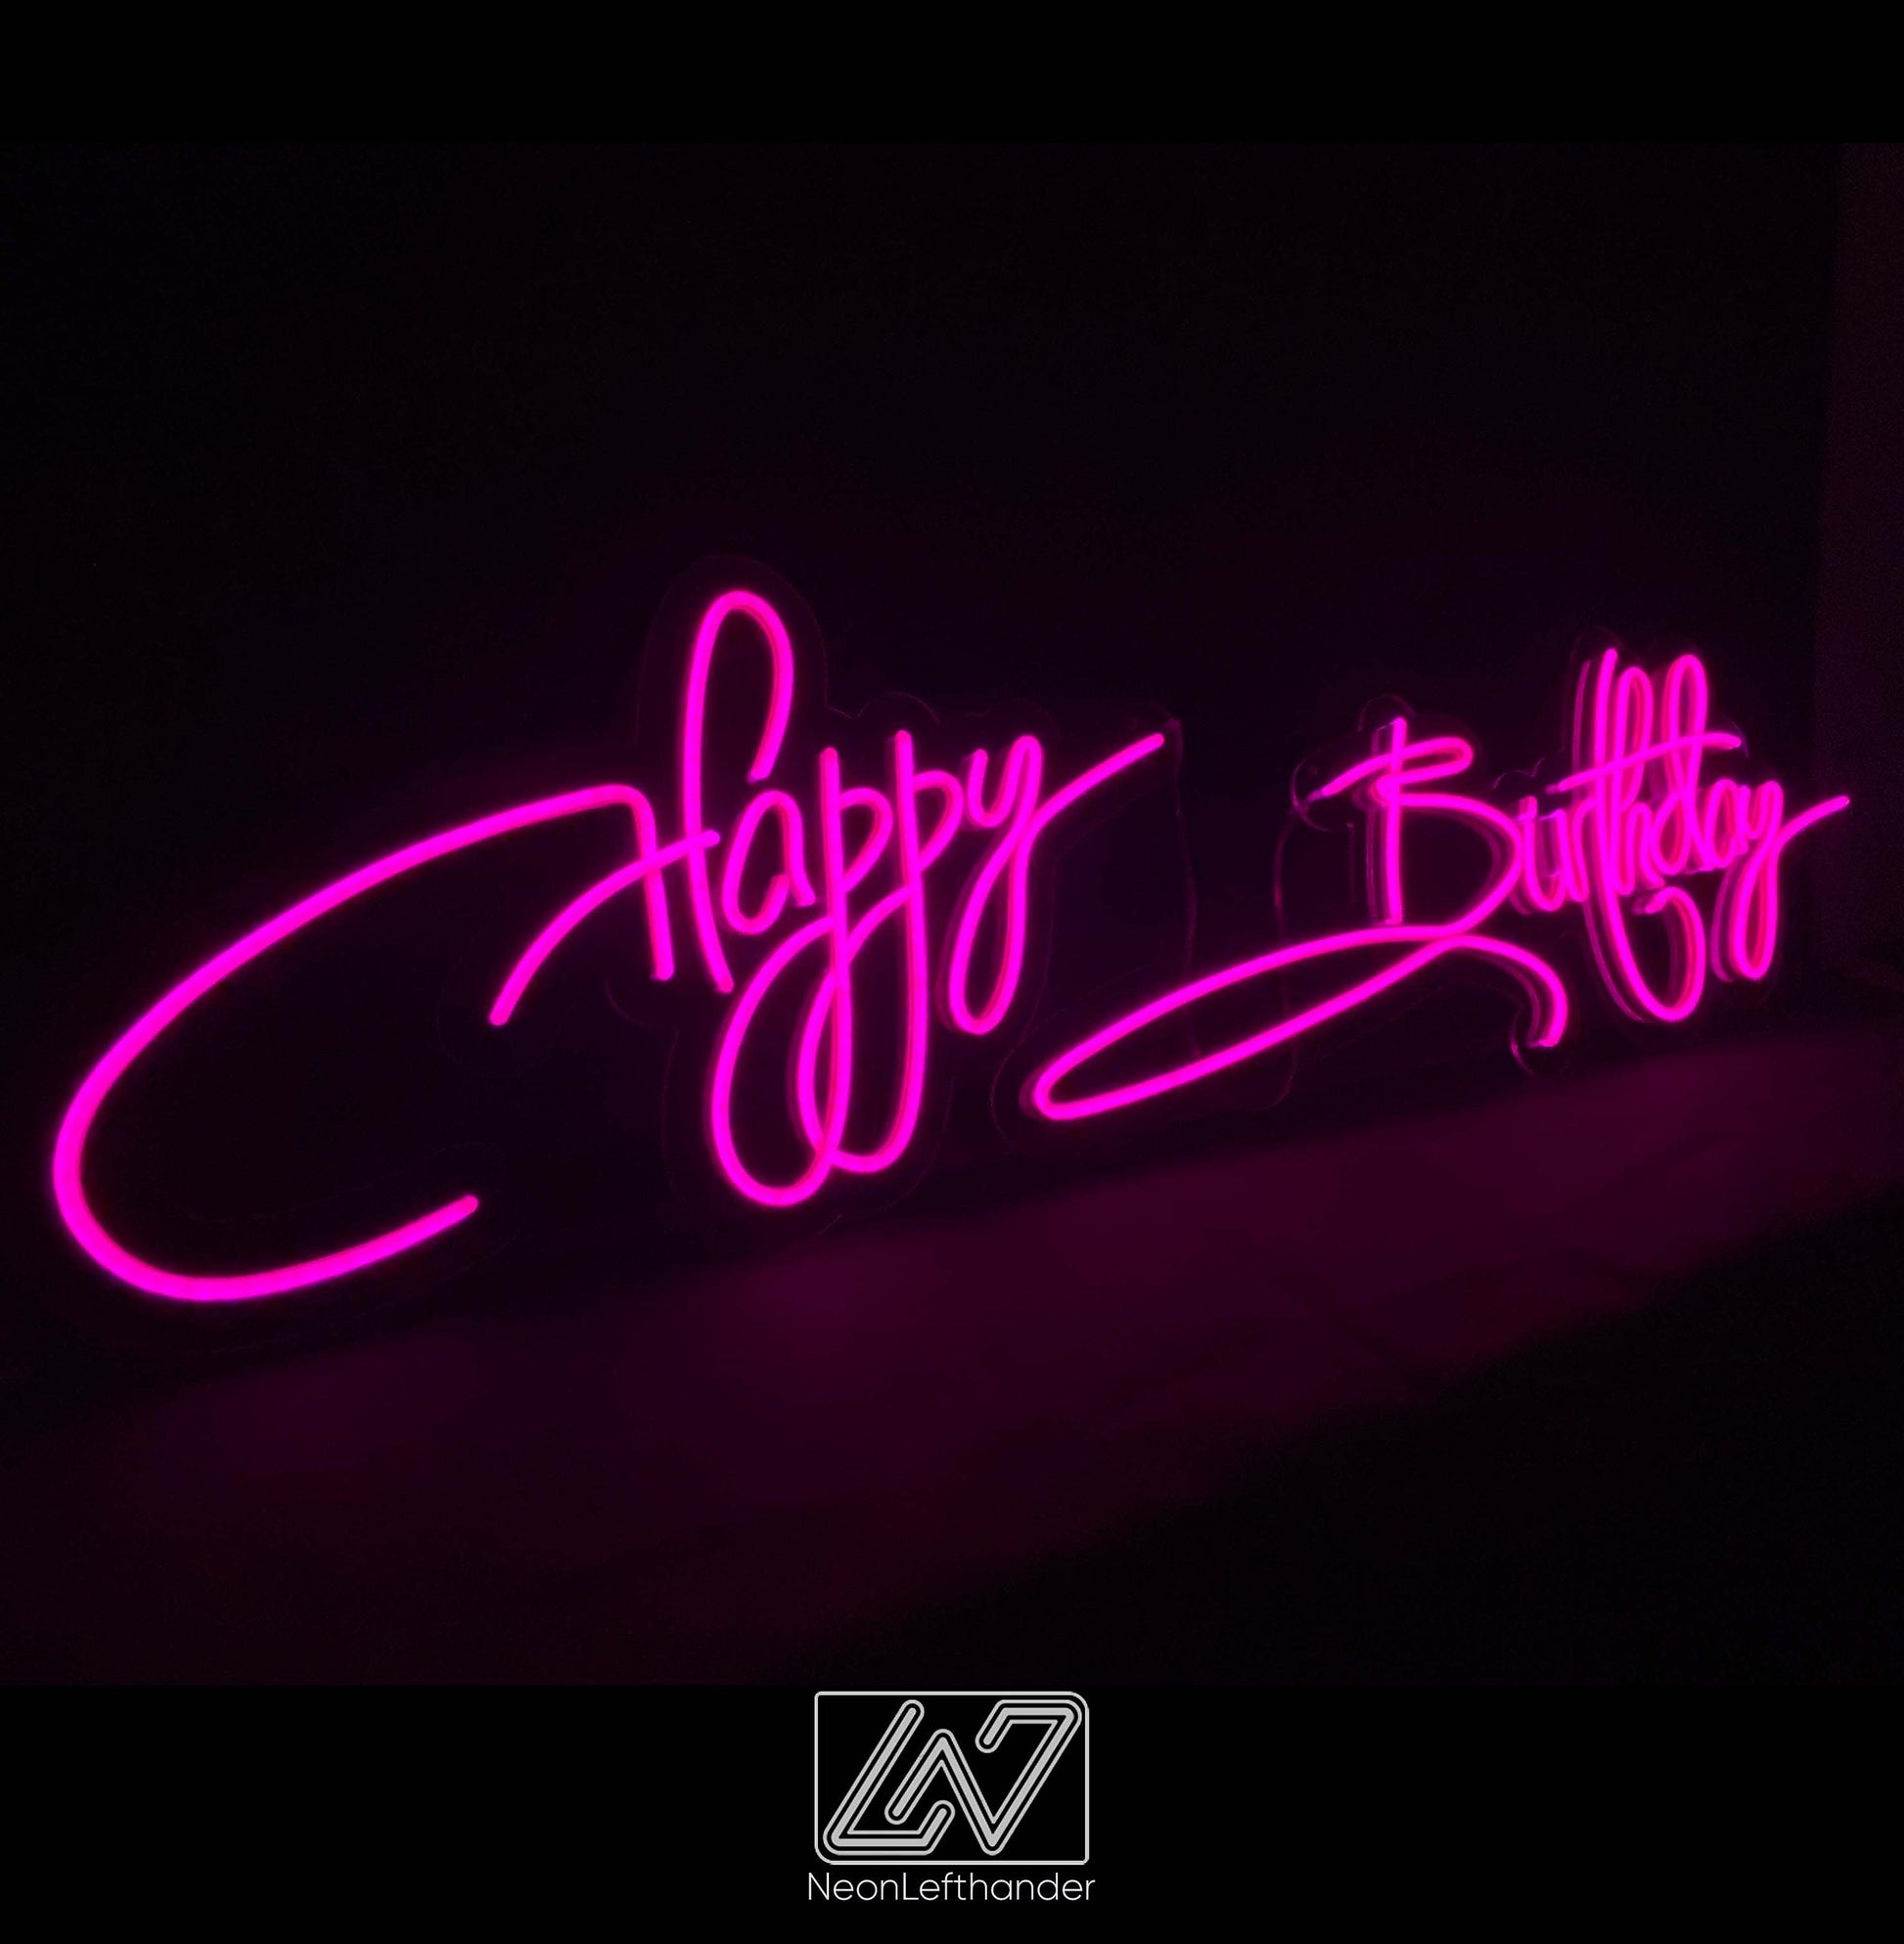 Happy Birthday - LED Neon Sign, Birthday Present, Kids Birthday Party Neon Sign, Birthday Backdrop Sign, Event Decor, Backdrop Decorations